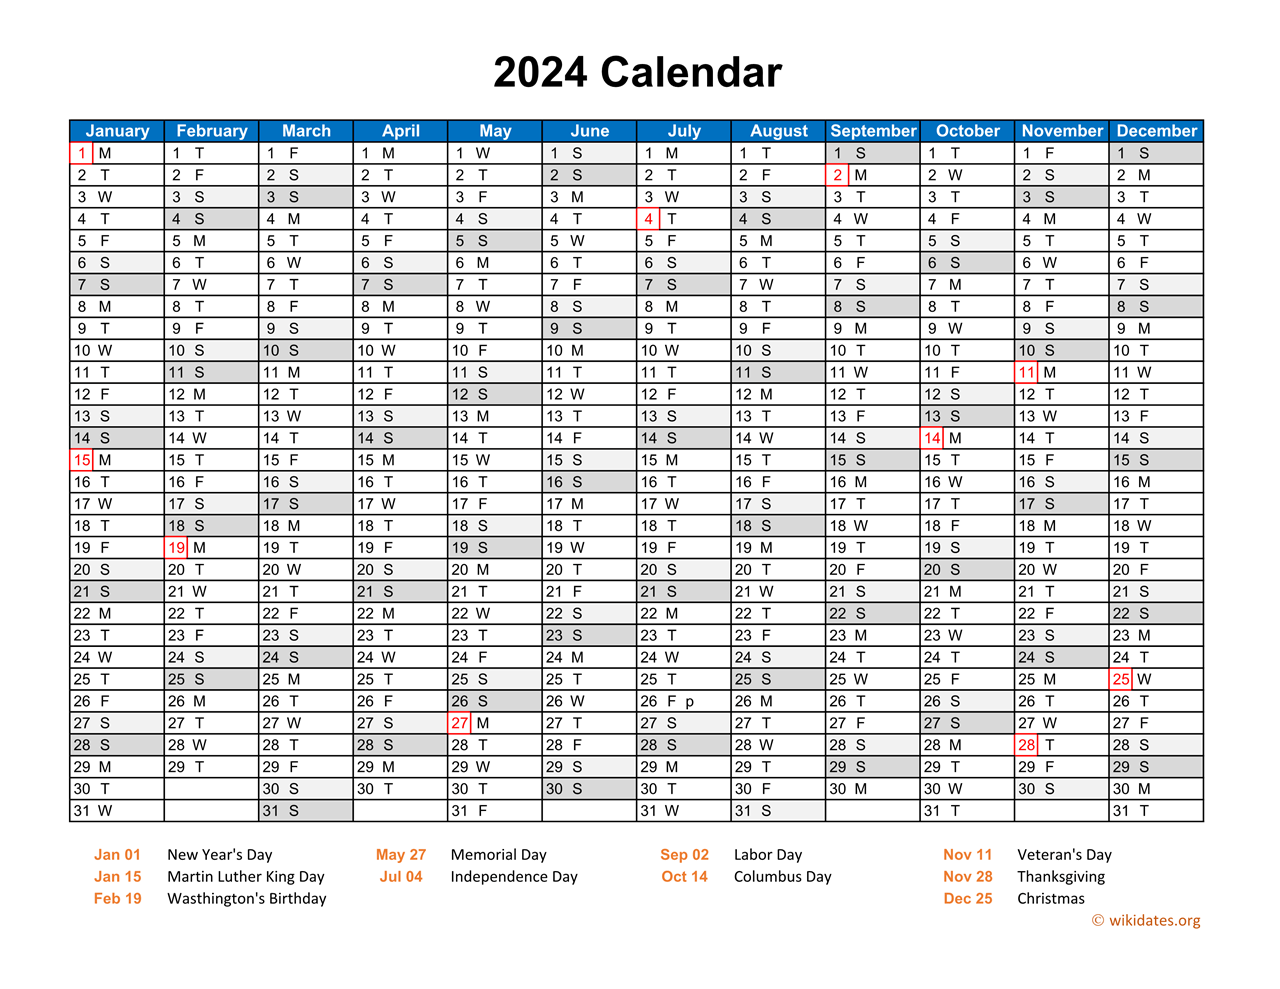 2024 Calendar Horizontal, One Page | WikiDates.org